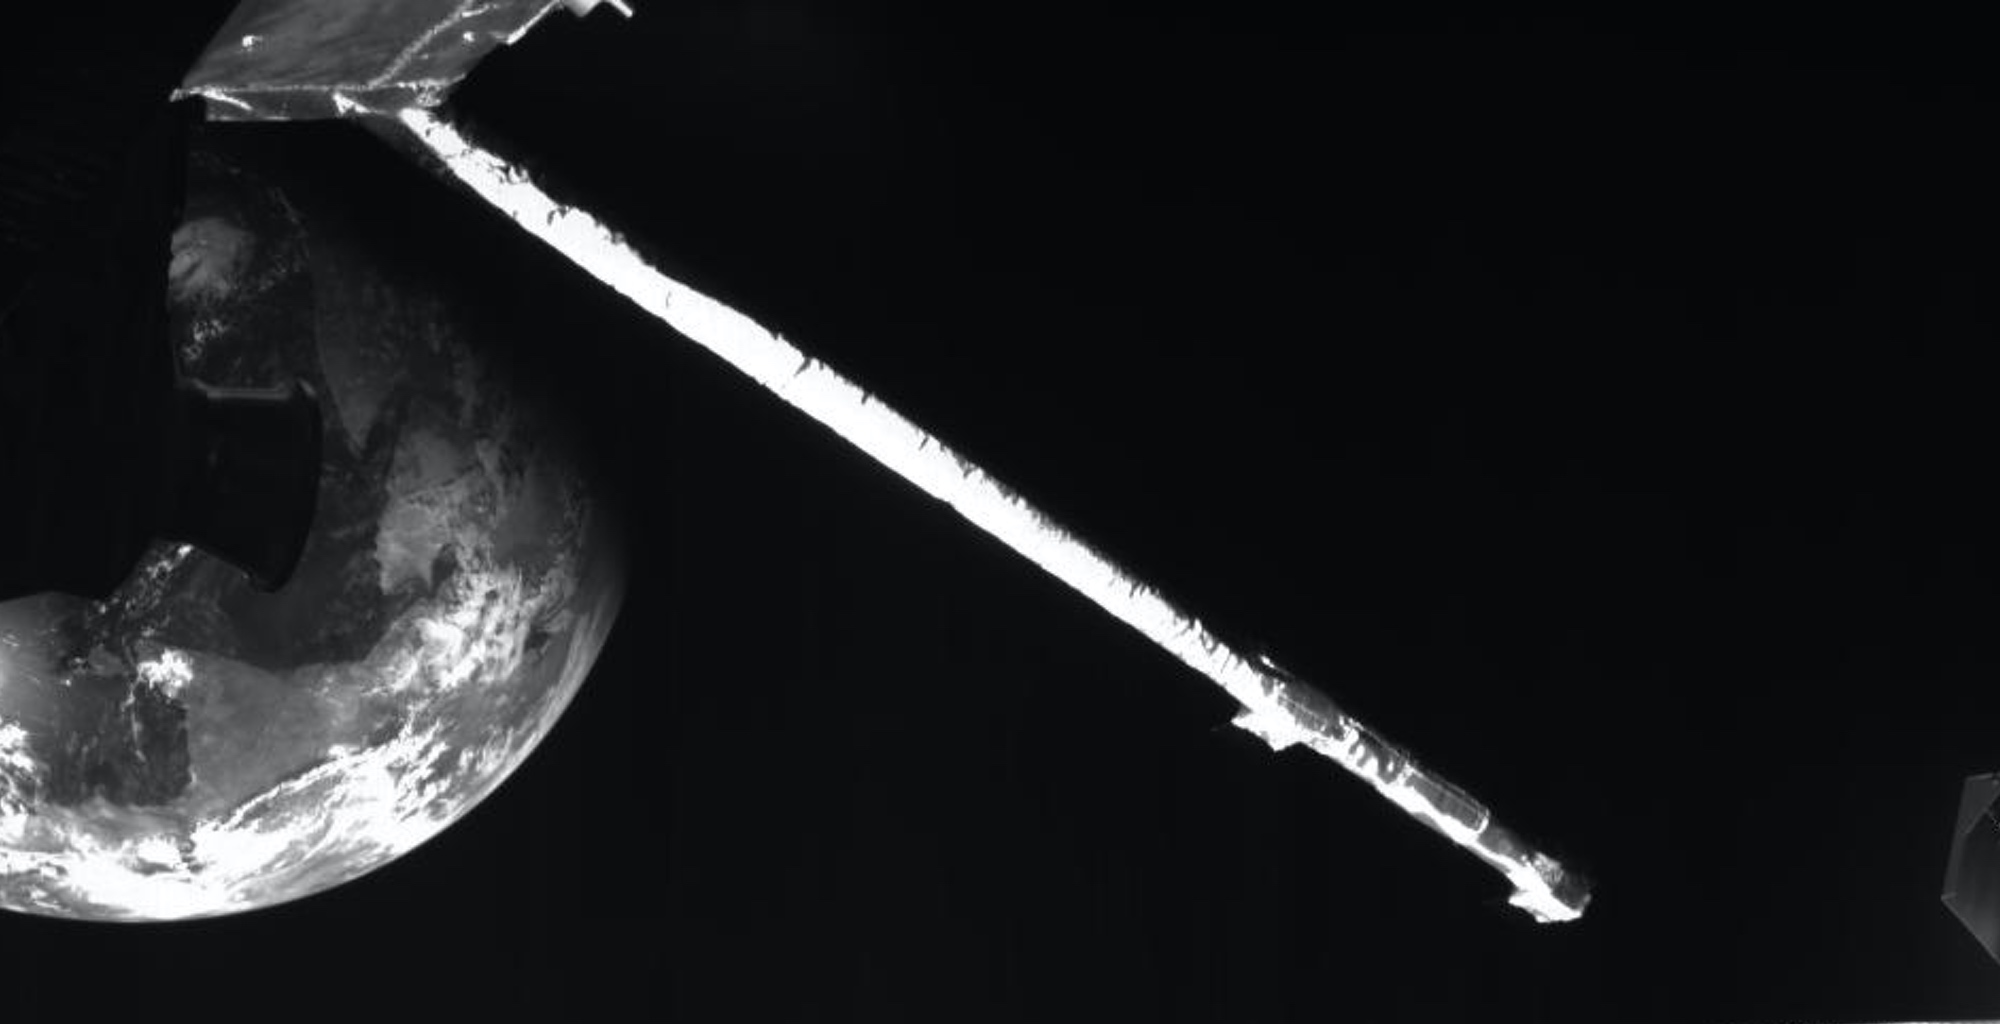 Photo prise par Bepi Colombo lors de son survol de la Terre, le 10 avril 2020. © ESA, BepiColombo, MTM, CC by-sa 3.0 IGO